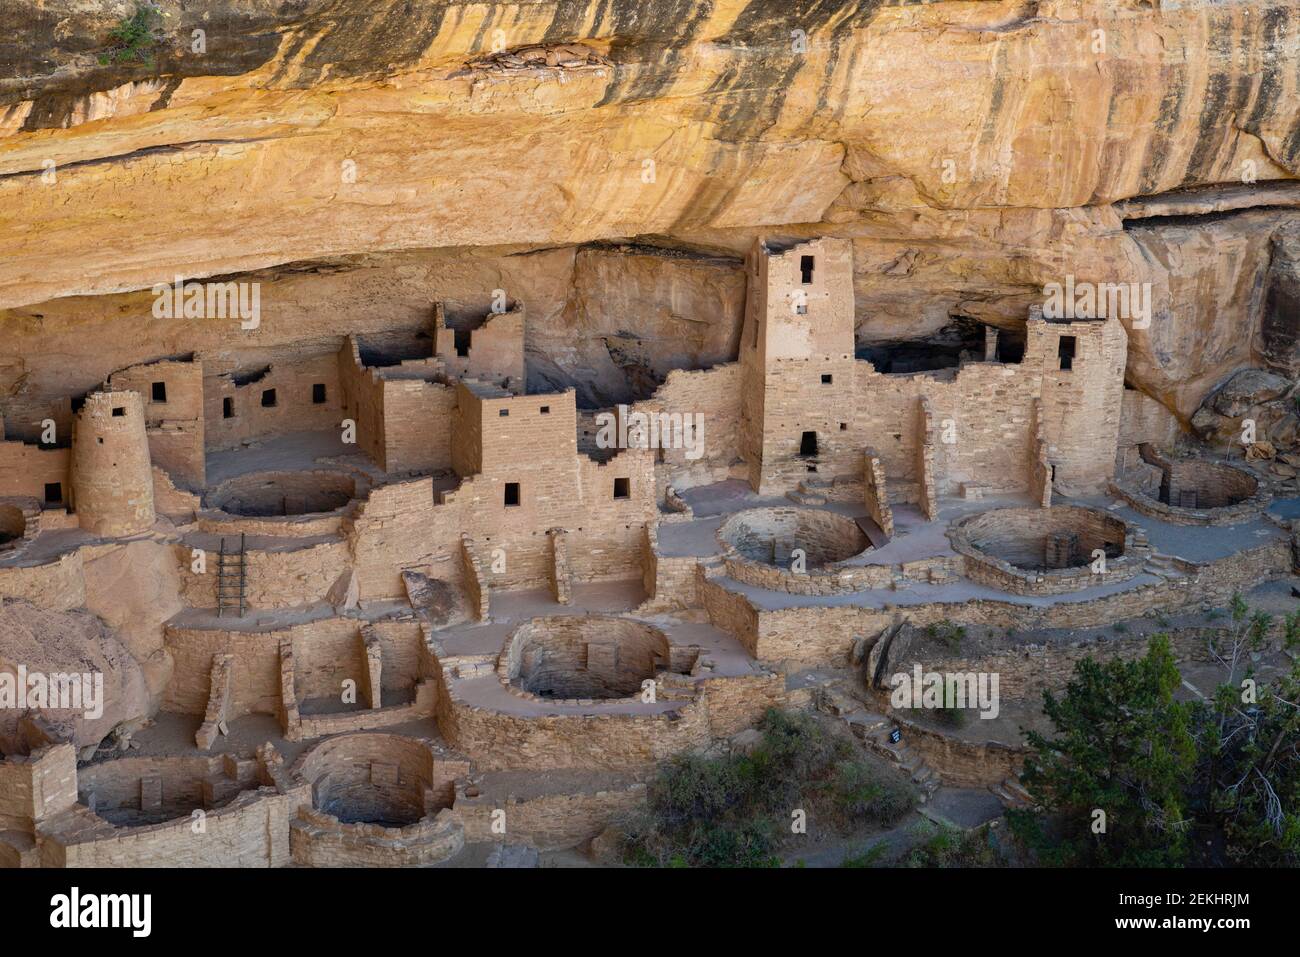 Cliff Palace. Image from Mesa Verde National Park near Durango, Colorado, showing ancient Anasazi dwellings. Stock Photo